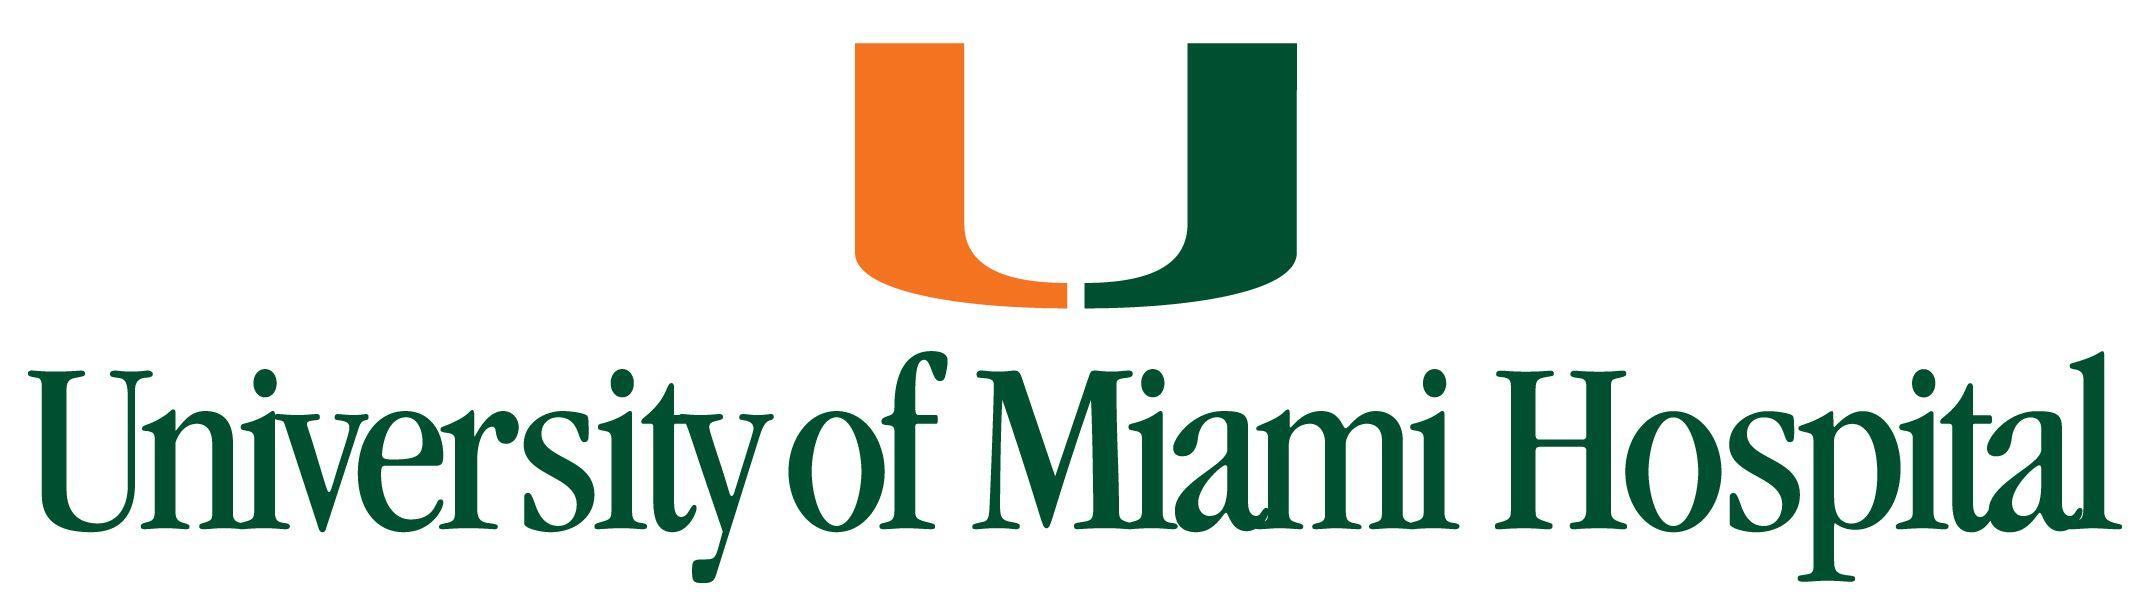 U of U Health Logo - UHealth – University of Miami Hospital « Logos & Brands Directory